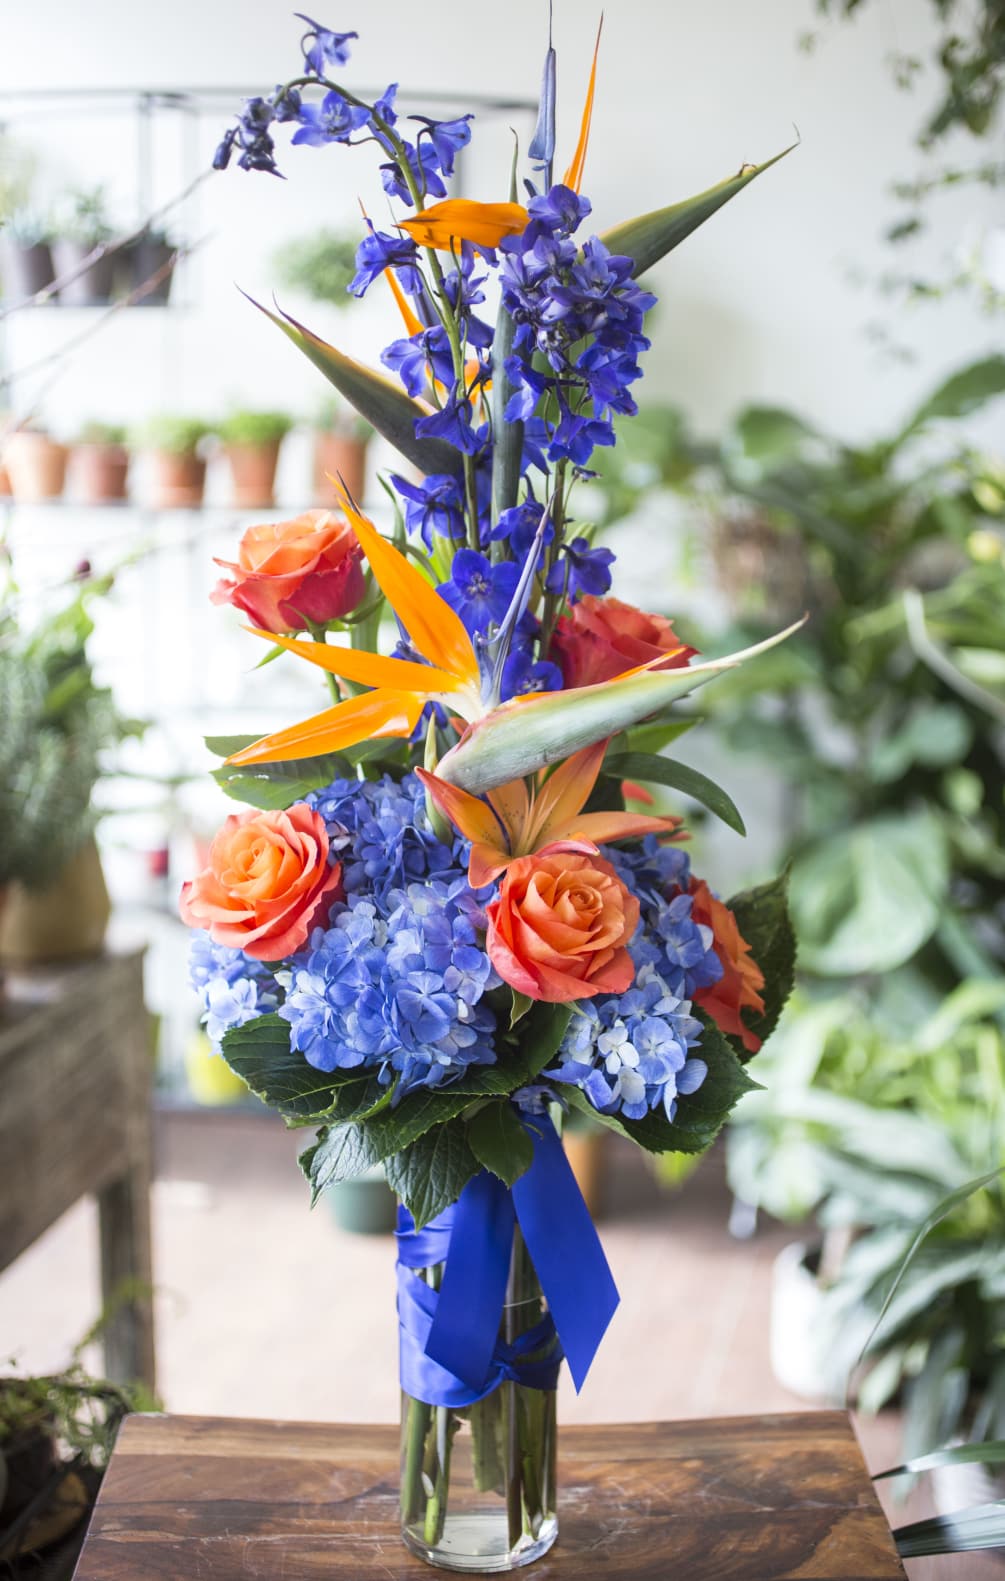 Blue and orange with Birds of Paradise, Hydrangeas, Delphinium and Roses arranged